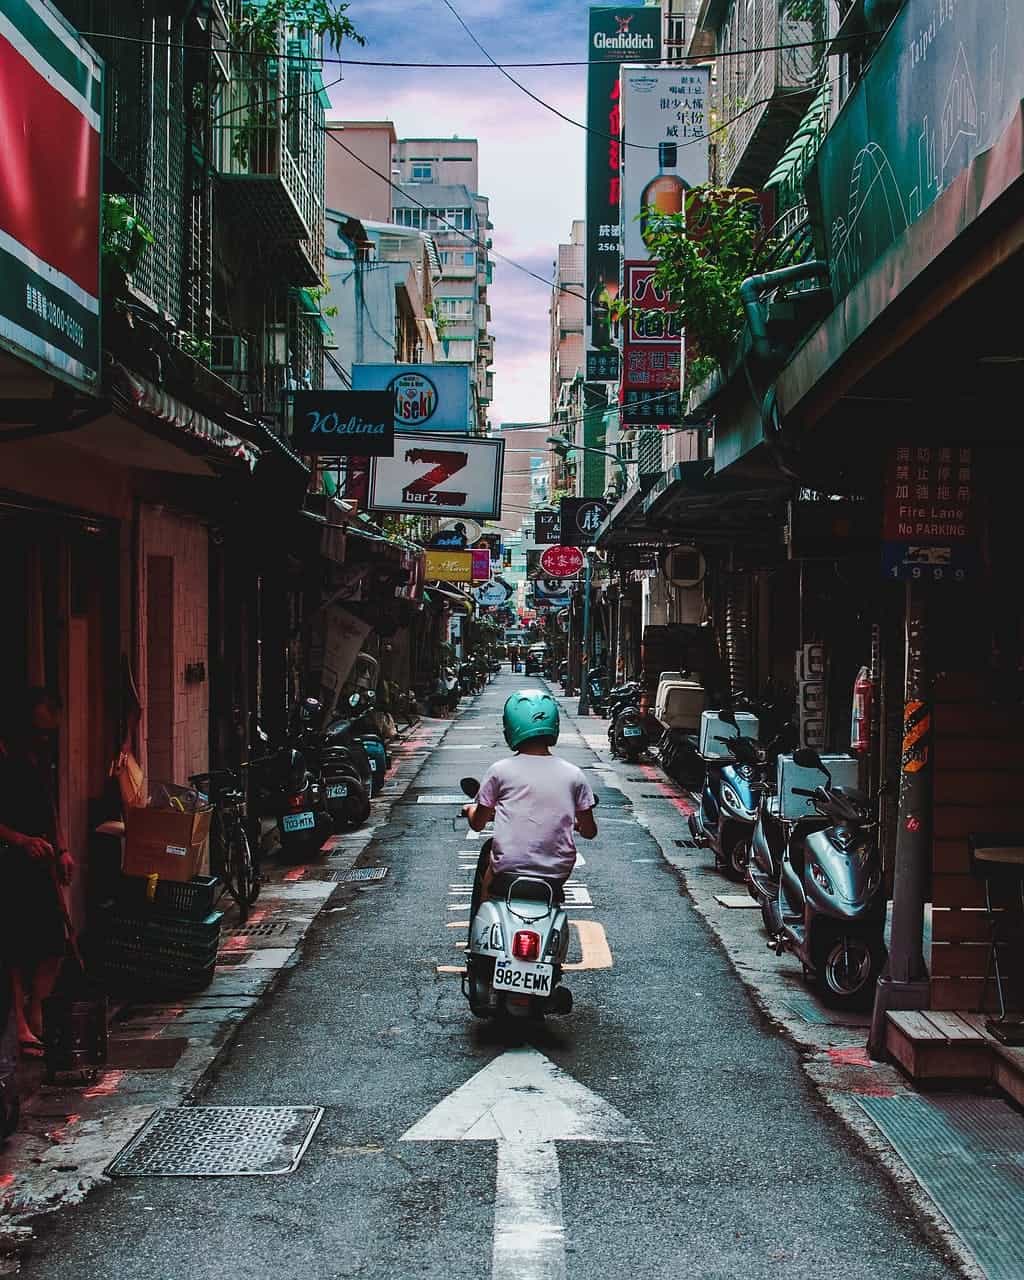 Man on moped through a narrow alley